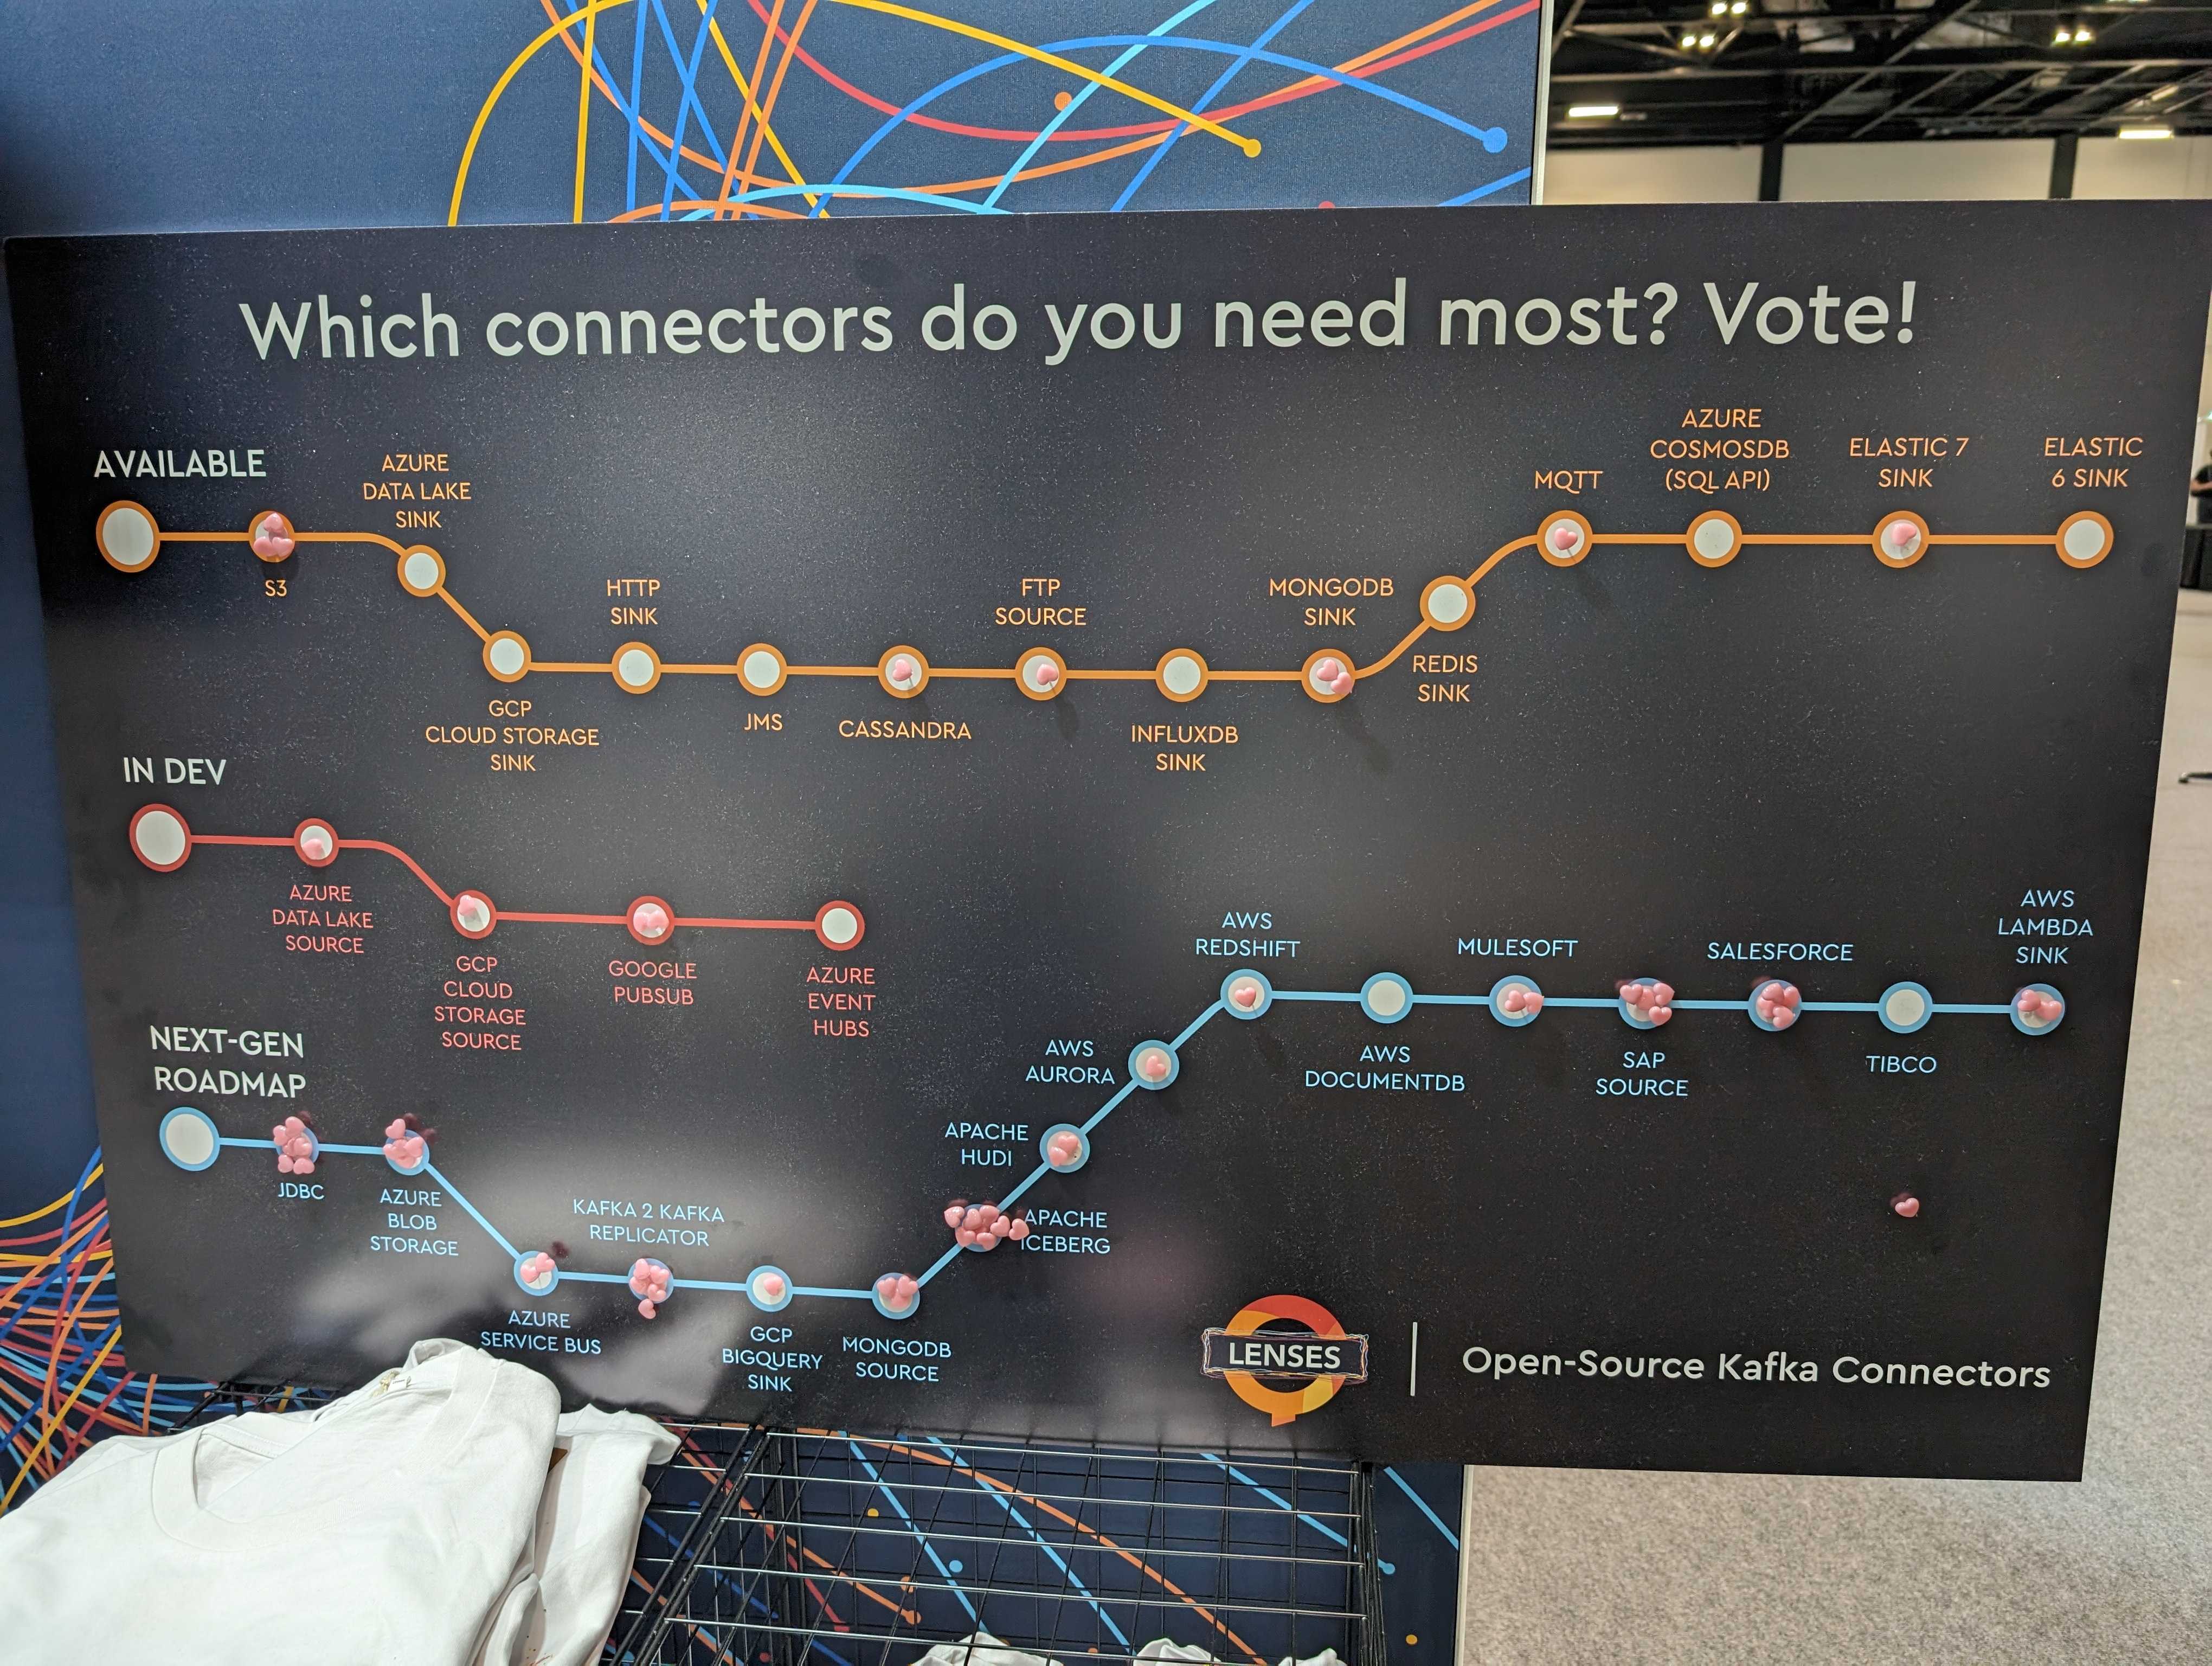 Kafka Connector roadmap votes